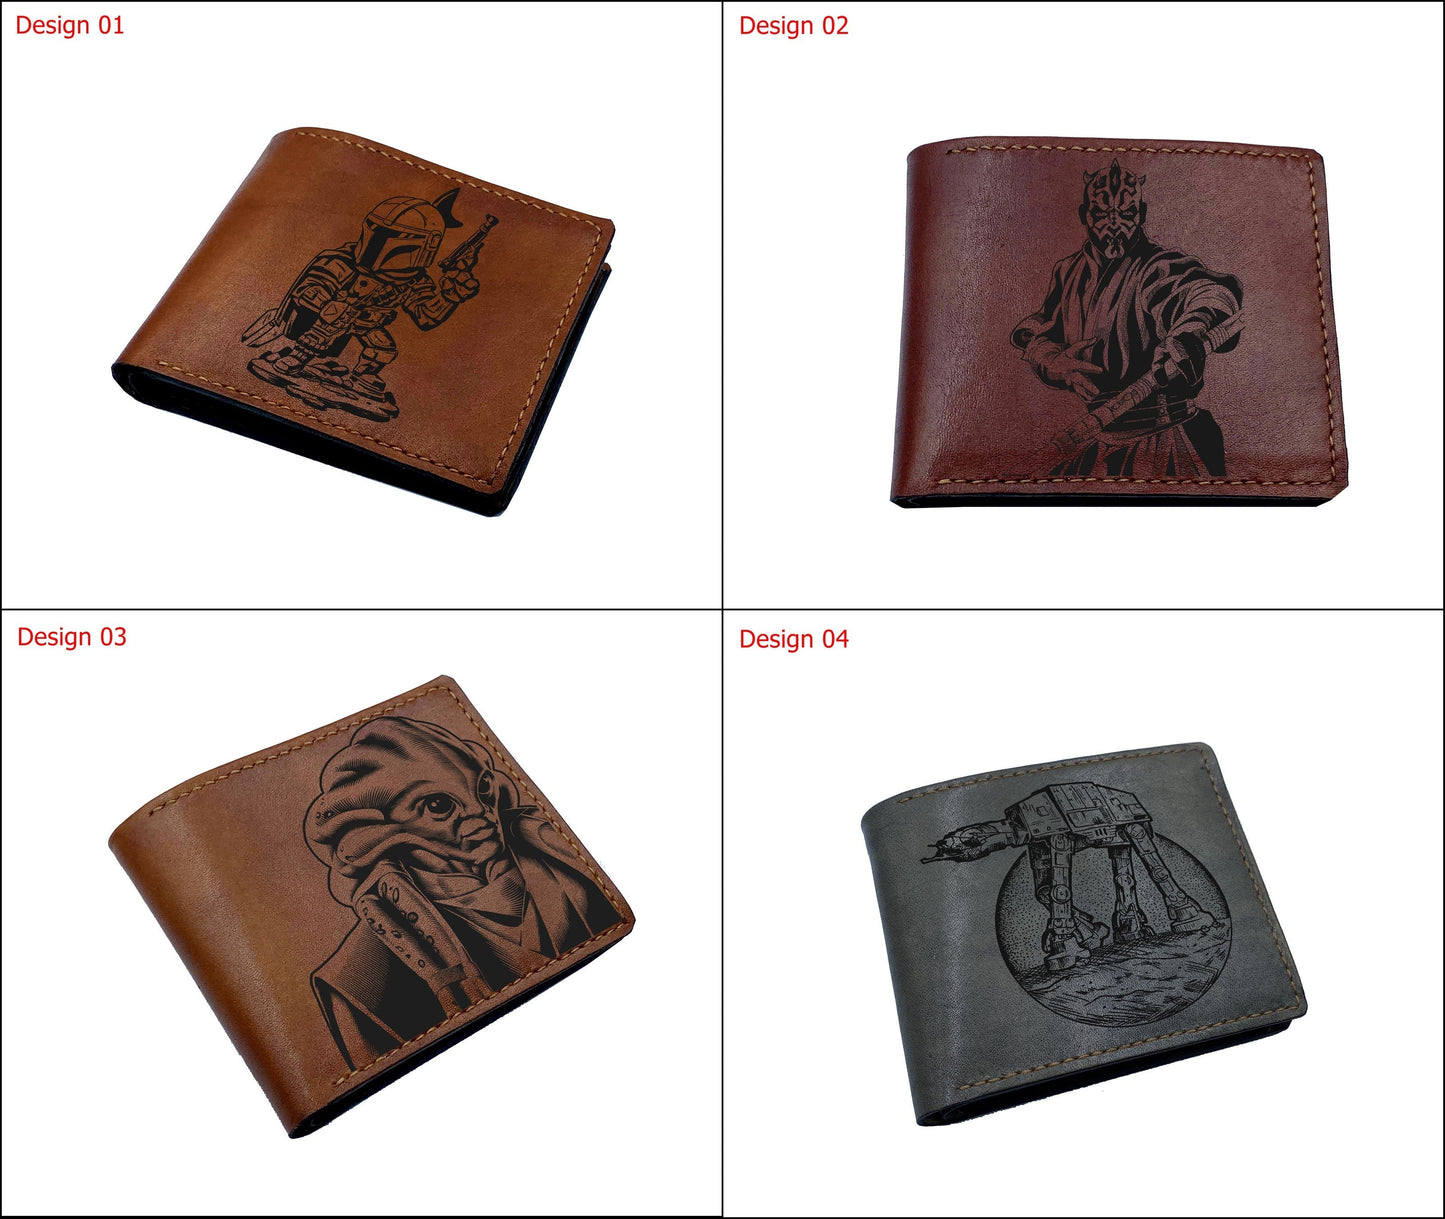 Personalized birthday gift ideas for him Starwars leather art wallet, Starwars movie present